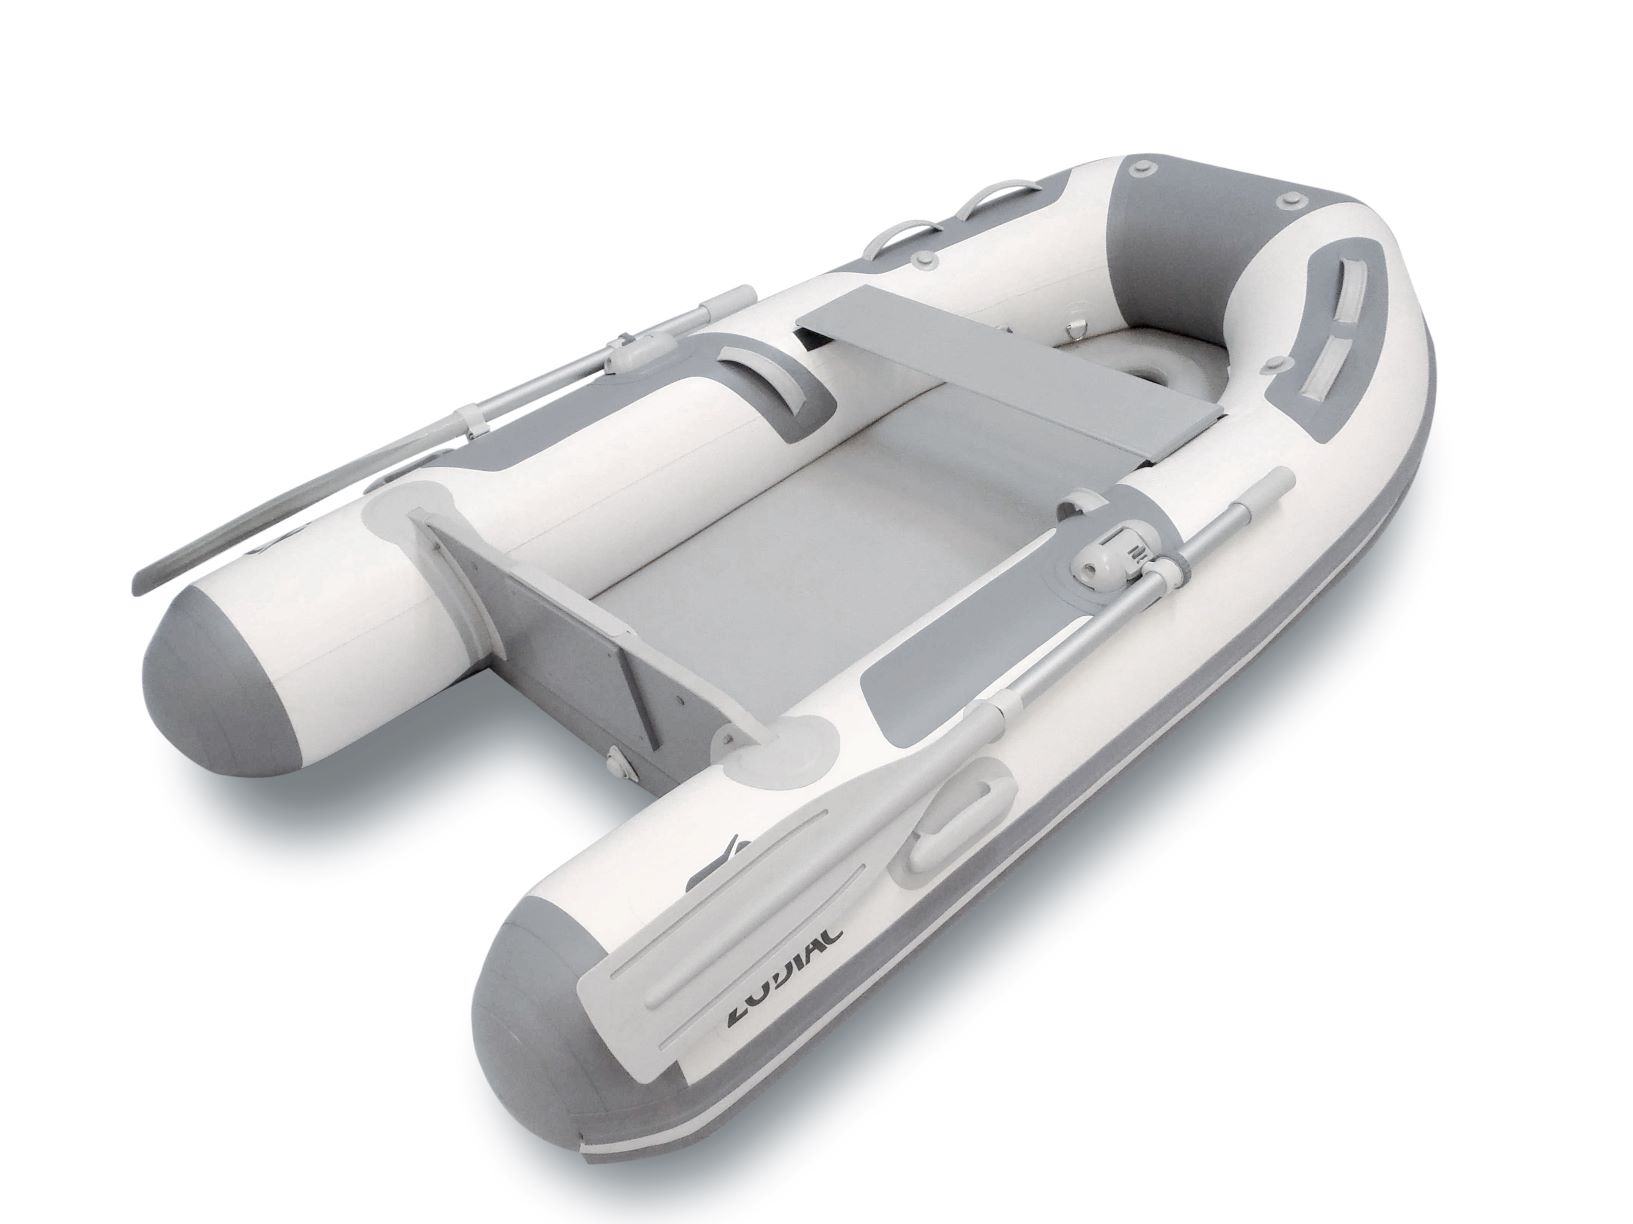 Zodiac CADET 270 Air Deck Floor 2.7M Inflatable Boat & 4HP Mariner 4 Stroke Outboard Tender Package IN STOCK